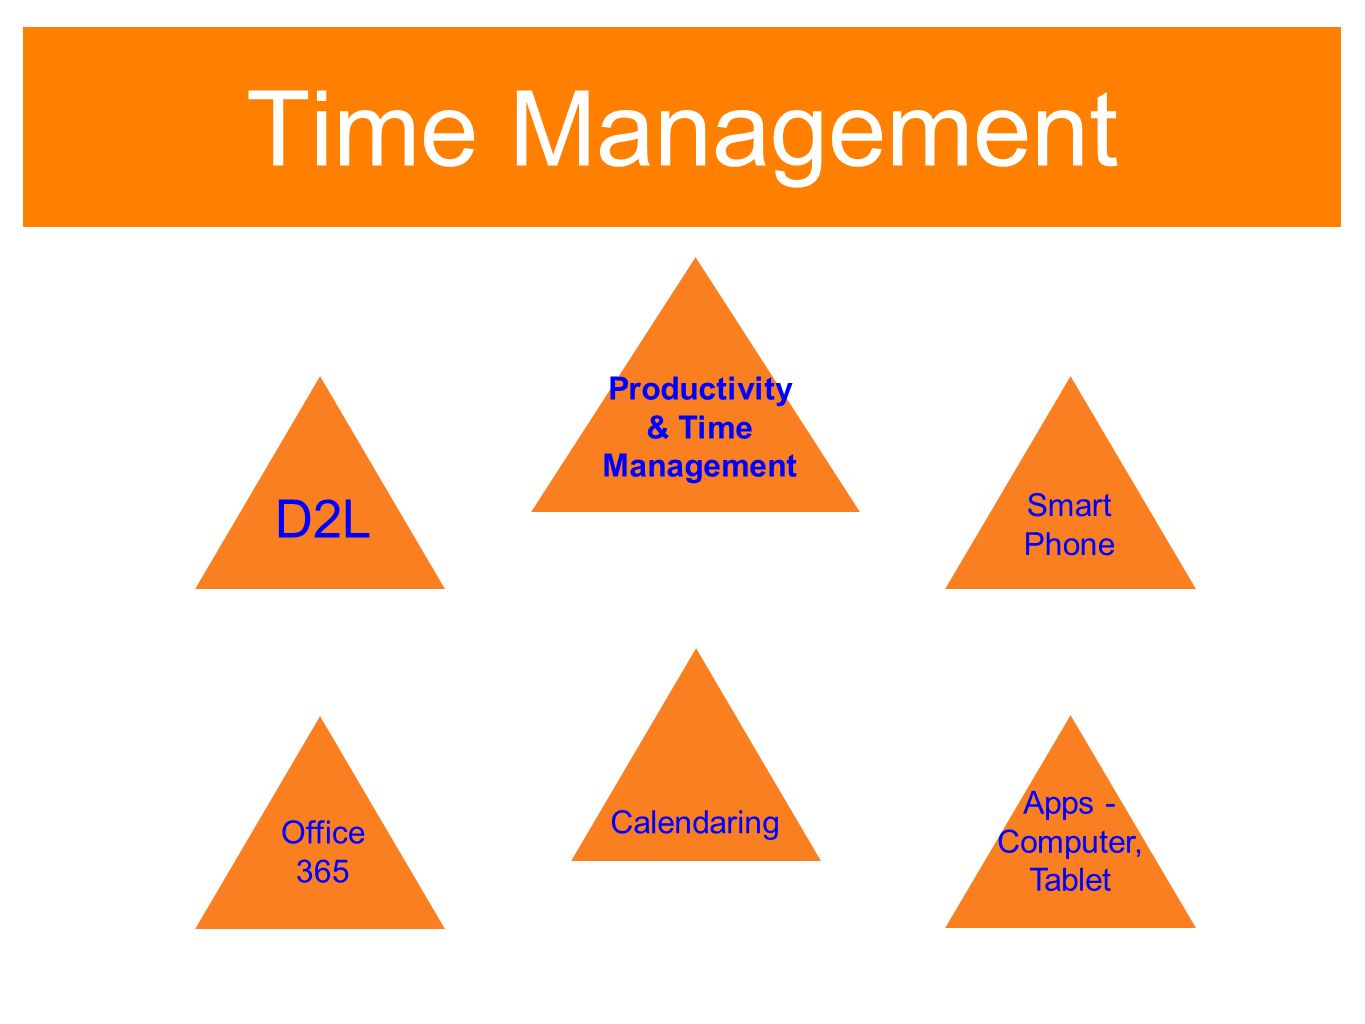 Time Management Calendaring D2L Office 365 Smart Phone Apps - Computer, Tablet Productivity & Time Management